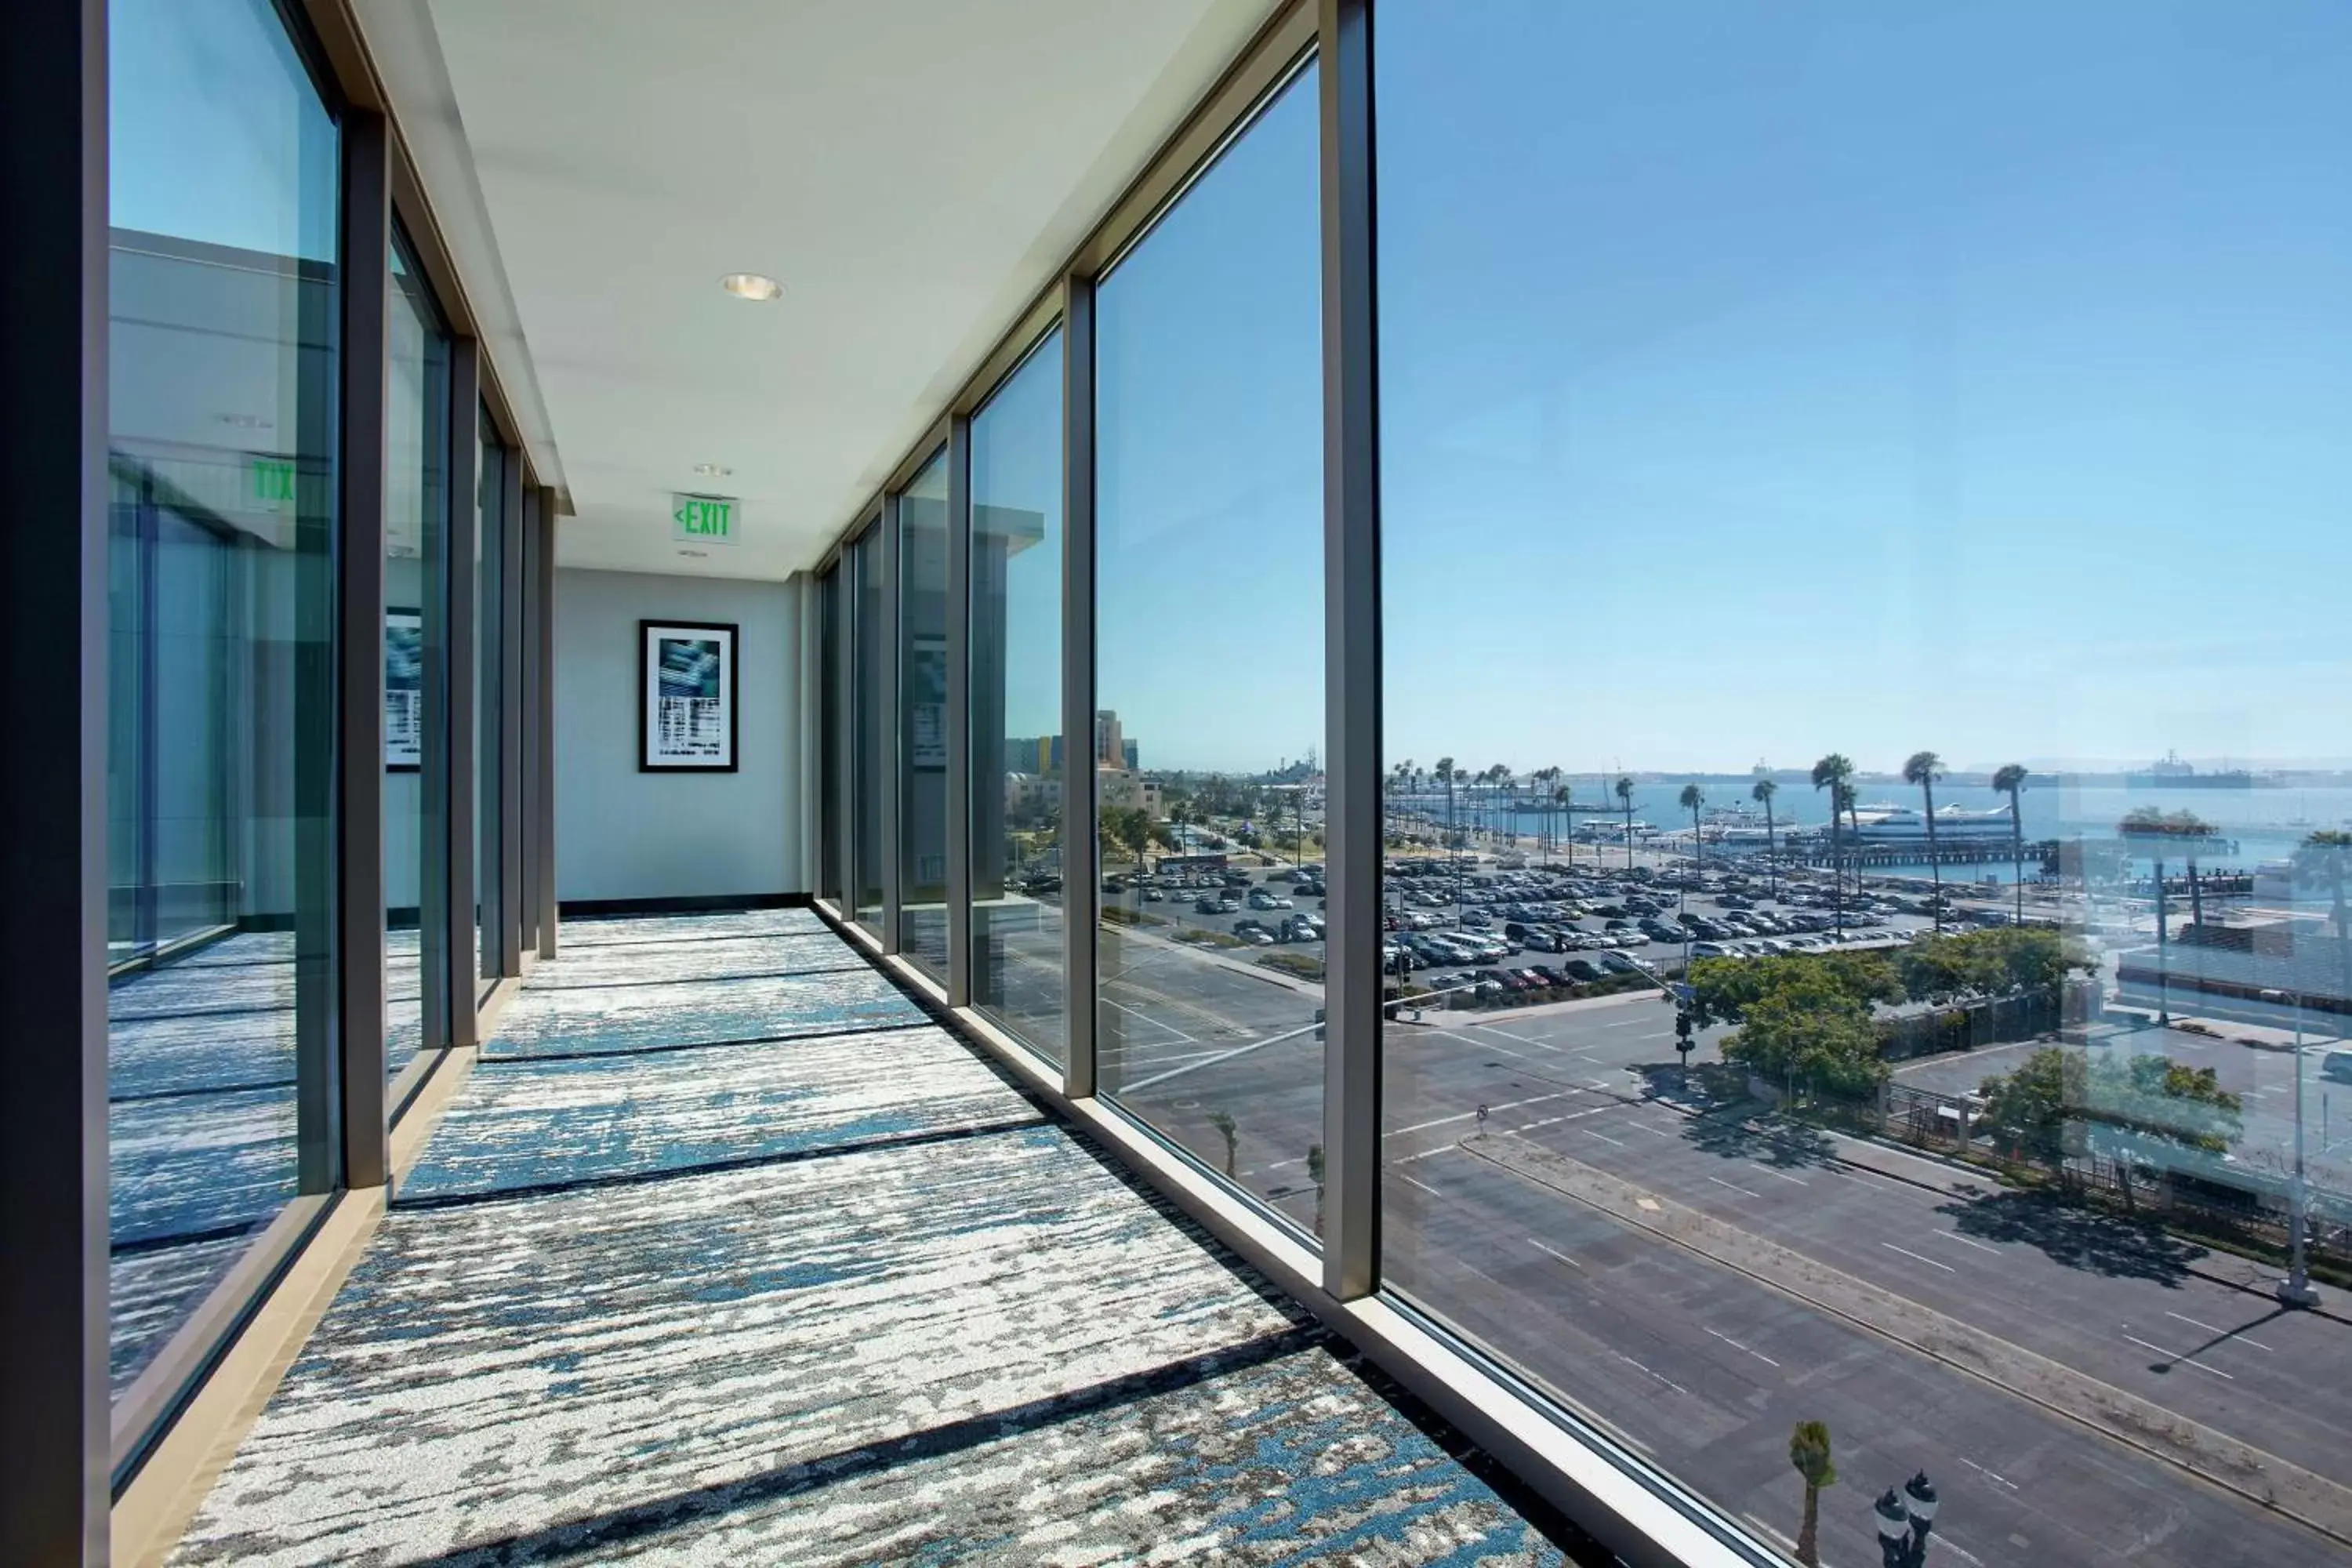 Lobby or reception in Hilton Garden Inn San Diego Downtown/Bayside, CA